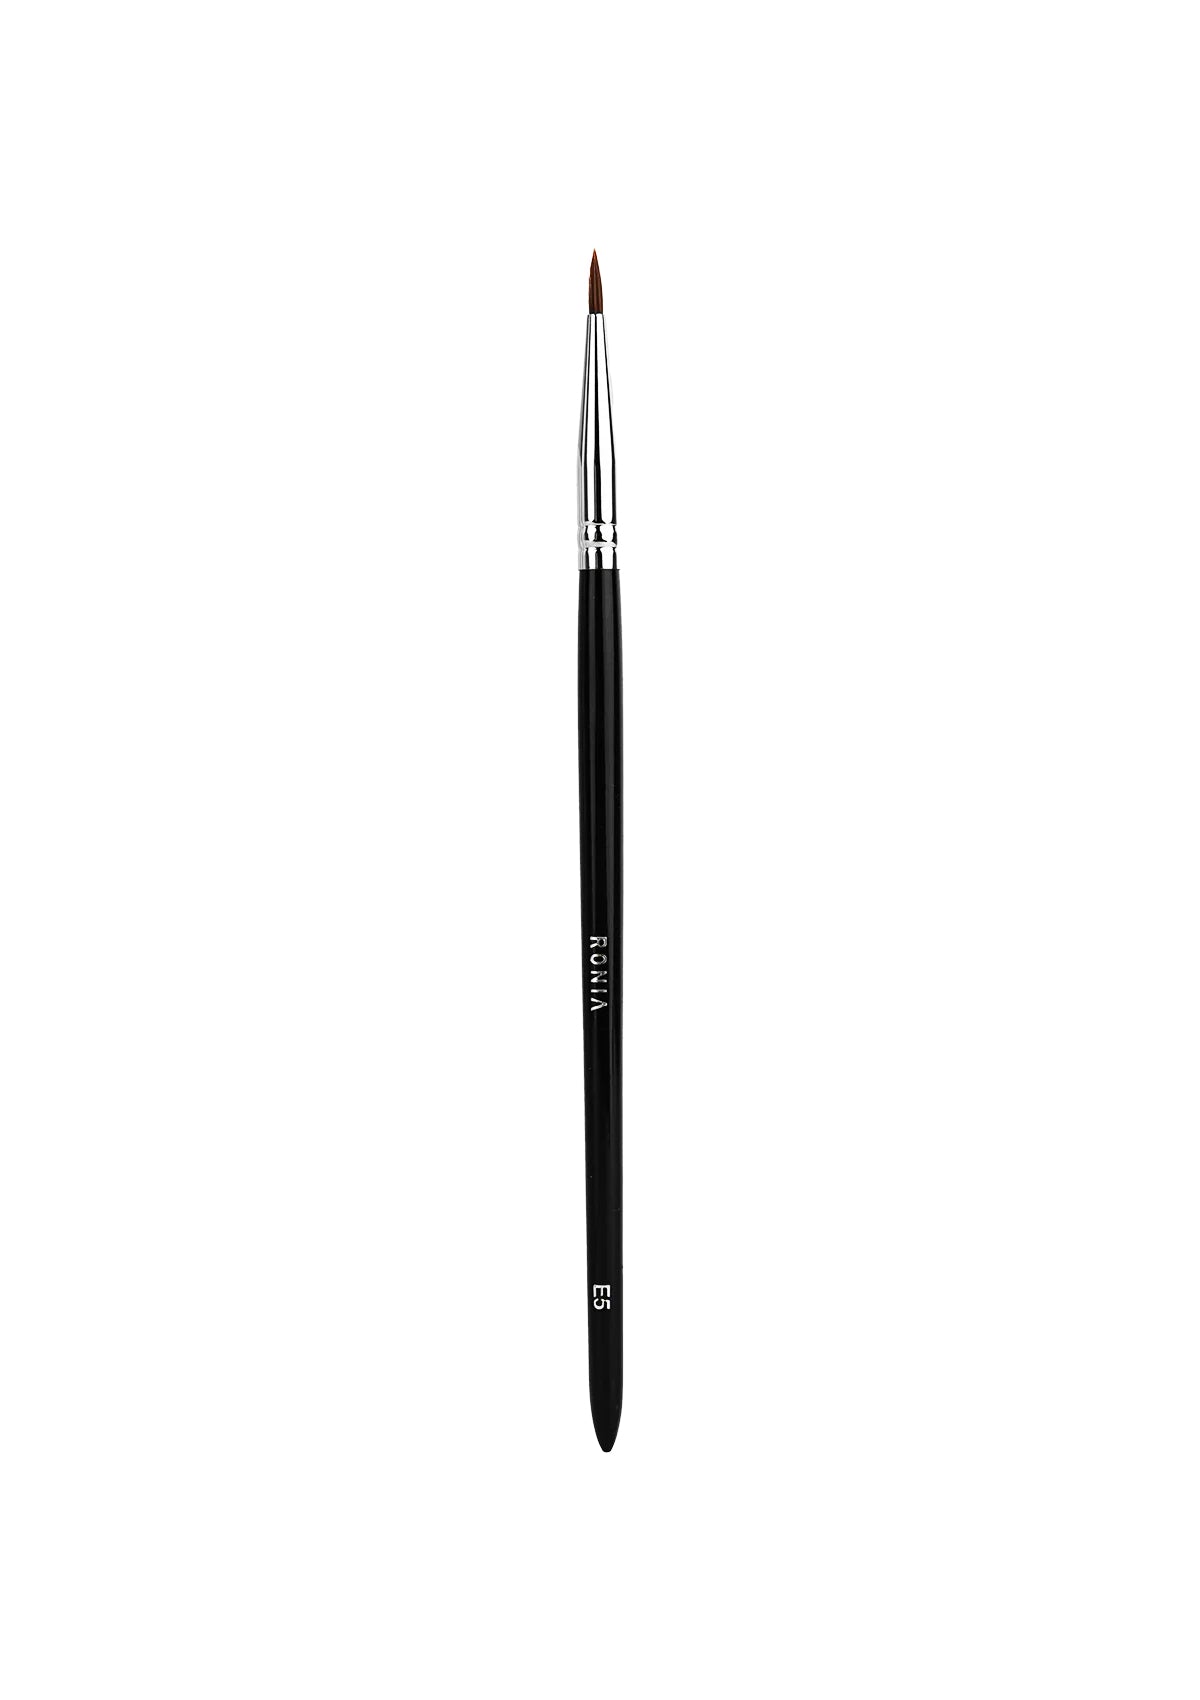 E5: Thin Straight Eyeliner Brush